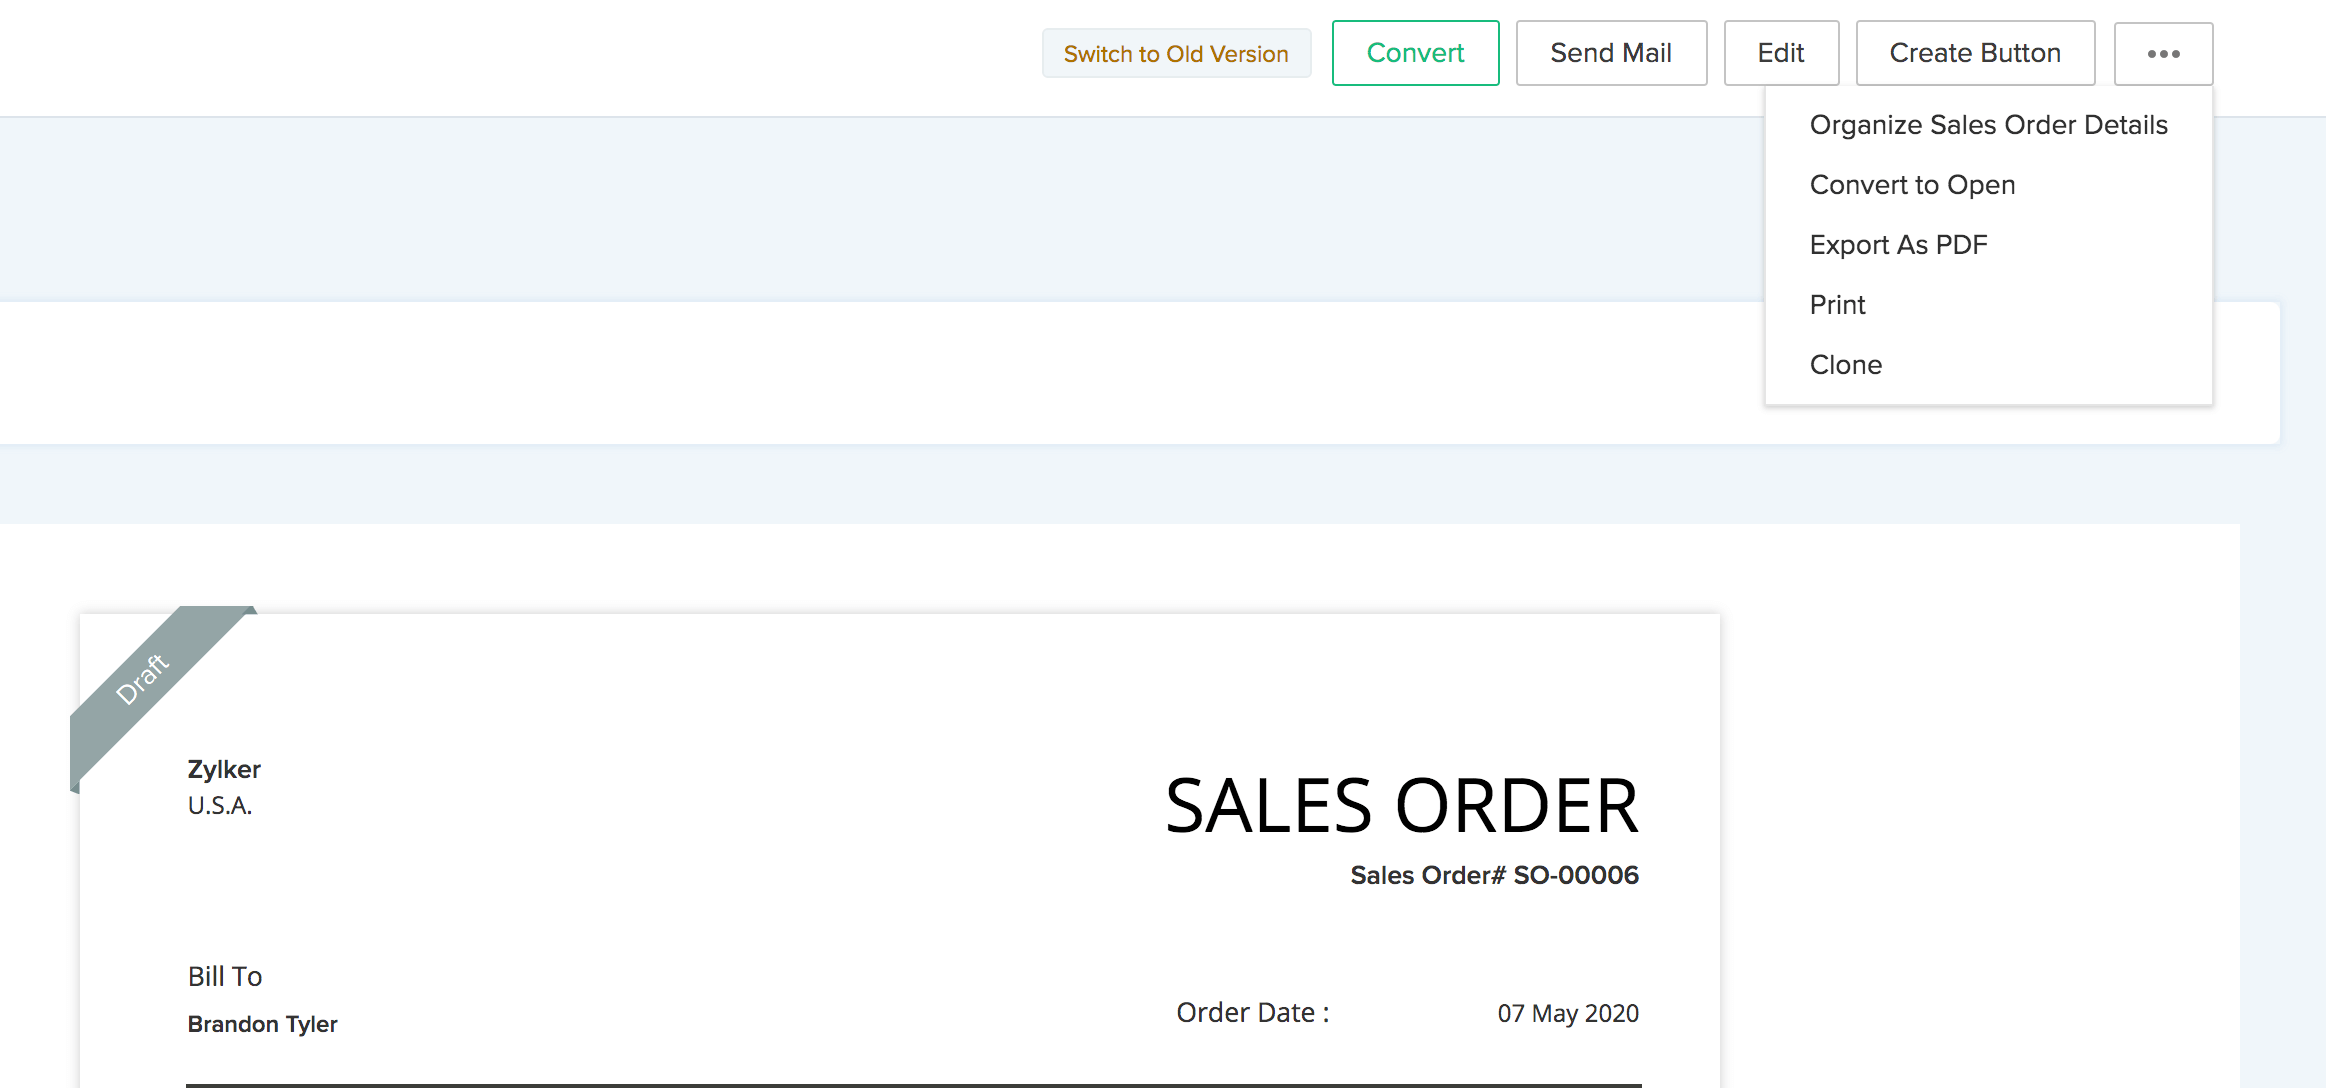 Sales Order Options